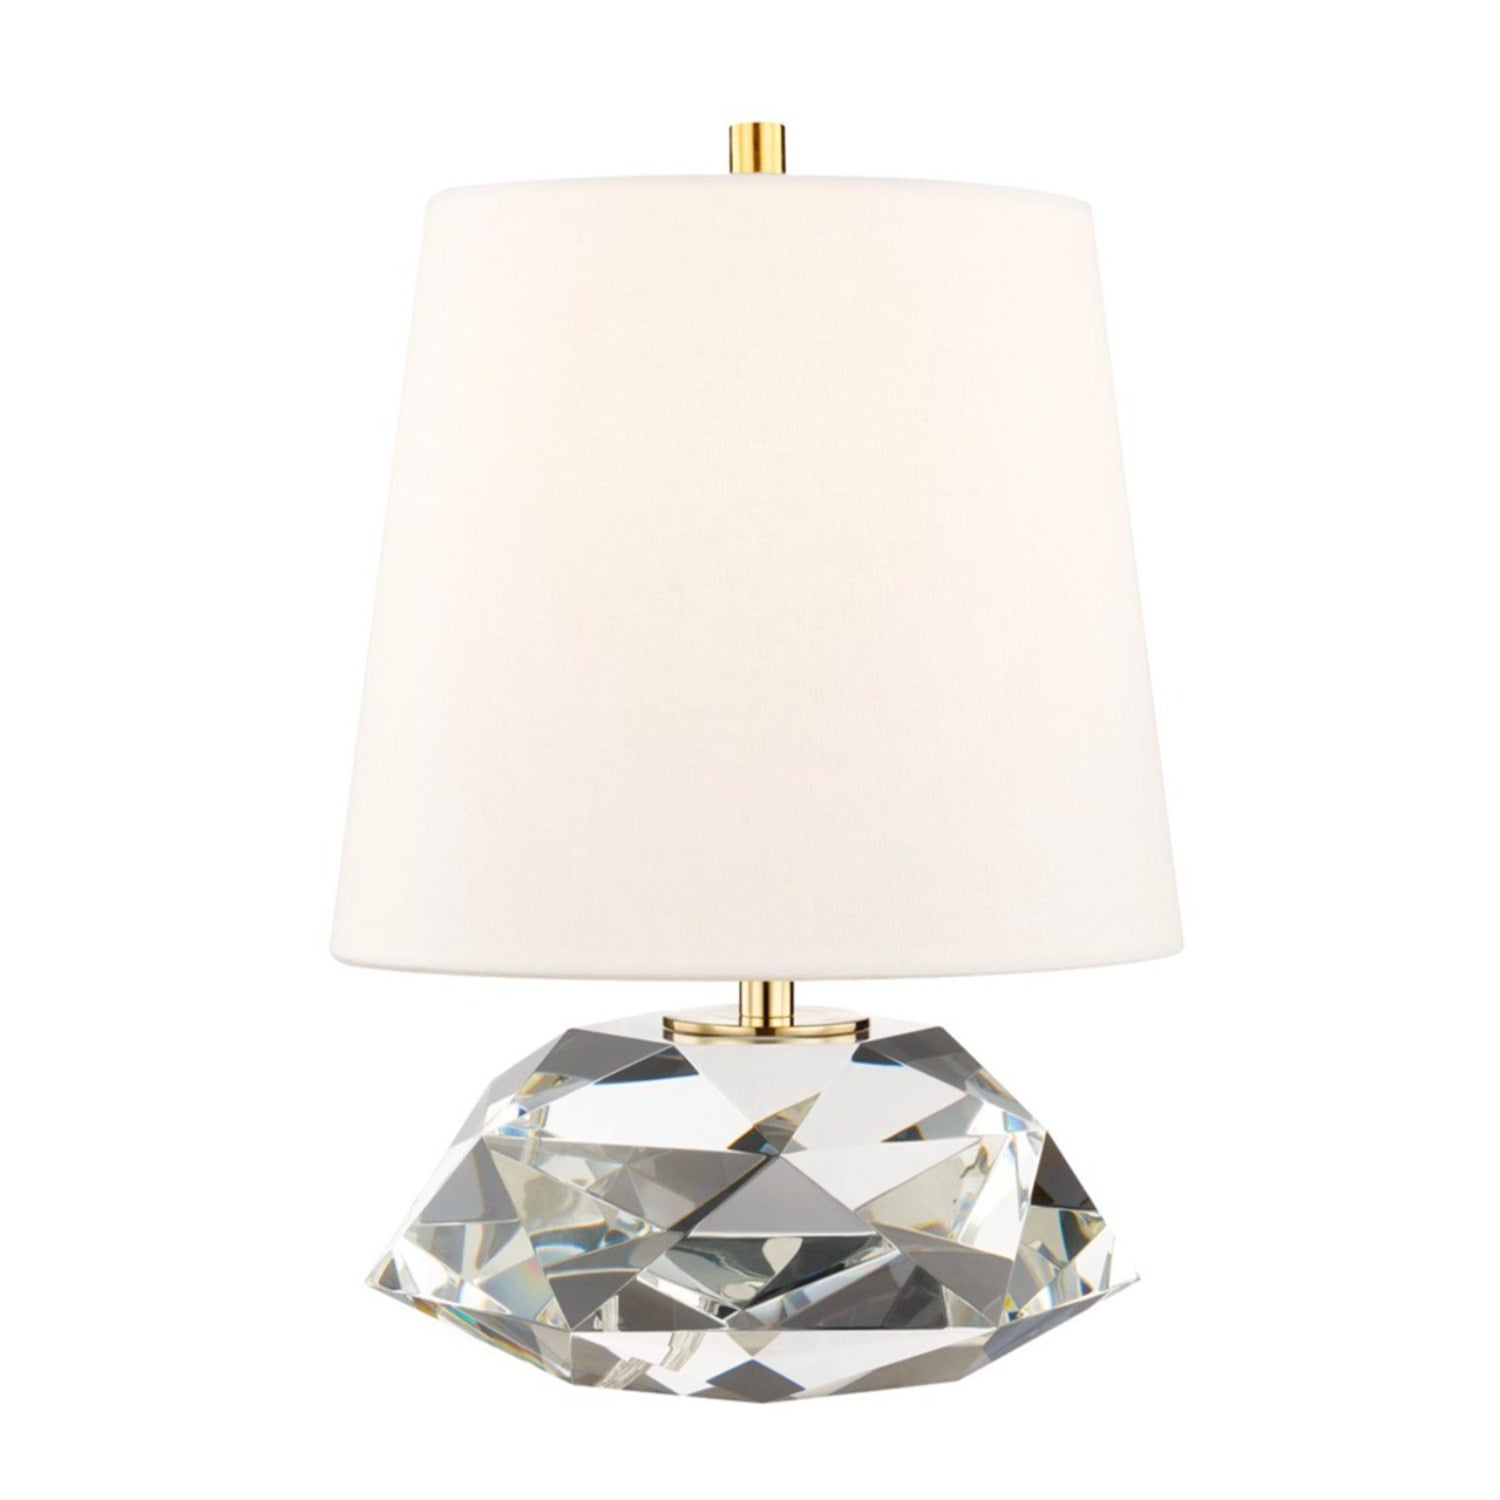 HENLEY - Diamond-shaped glass table lamp